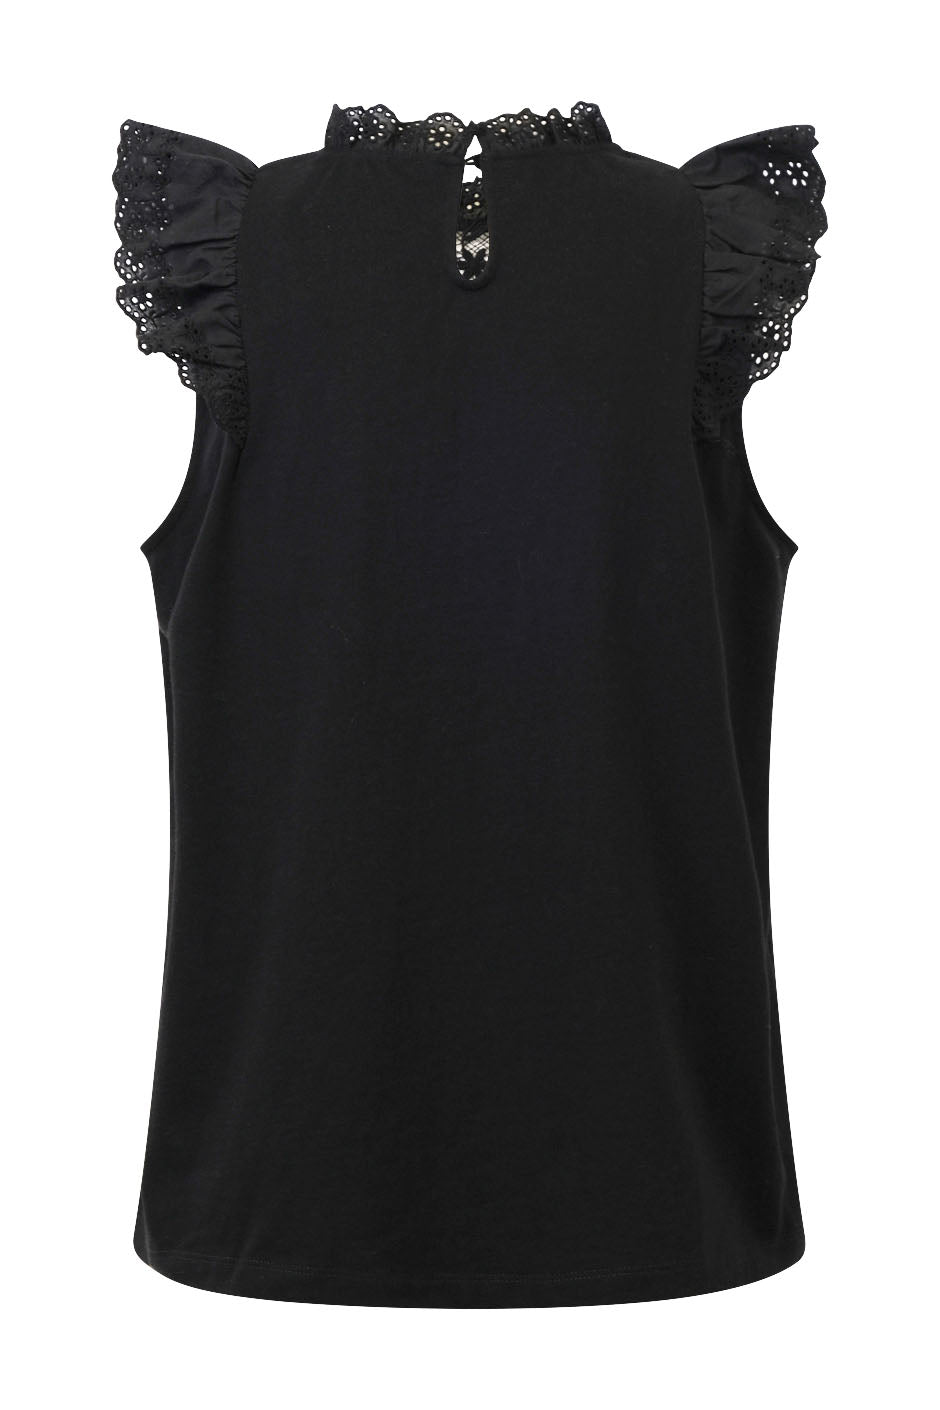 Black Lace Trim Frill Scoop Neck T-Shirt